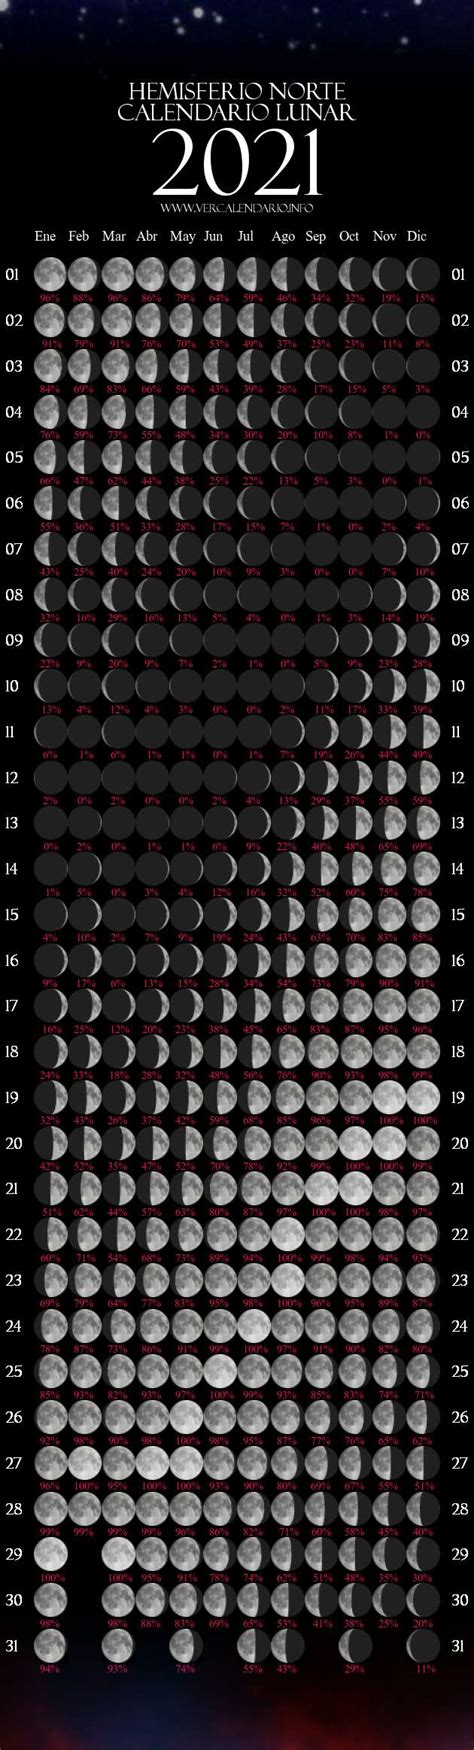 Calendario Lunar 2021 (Hemisferio Norte)